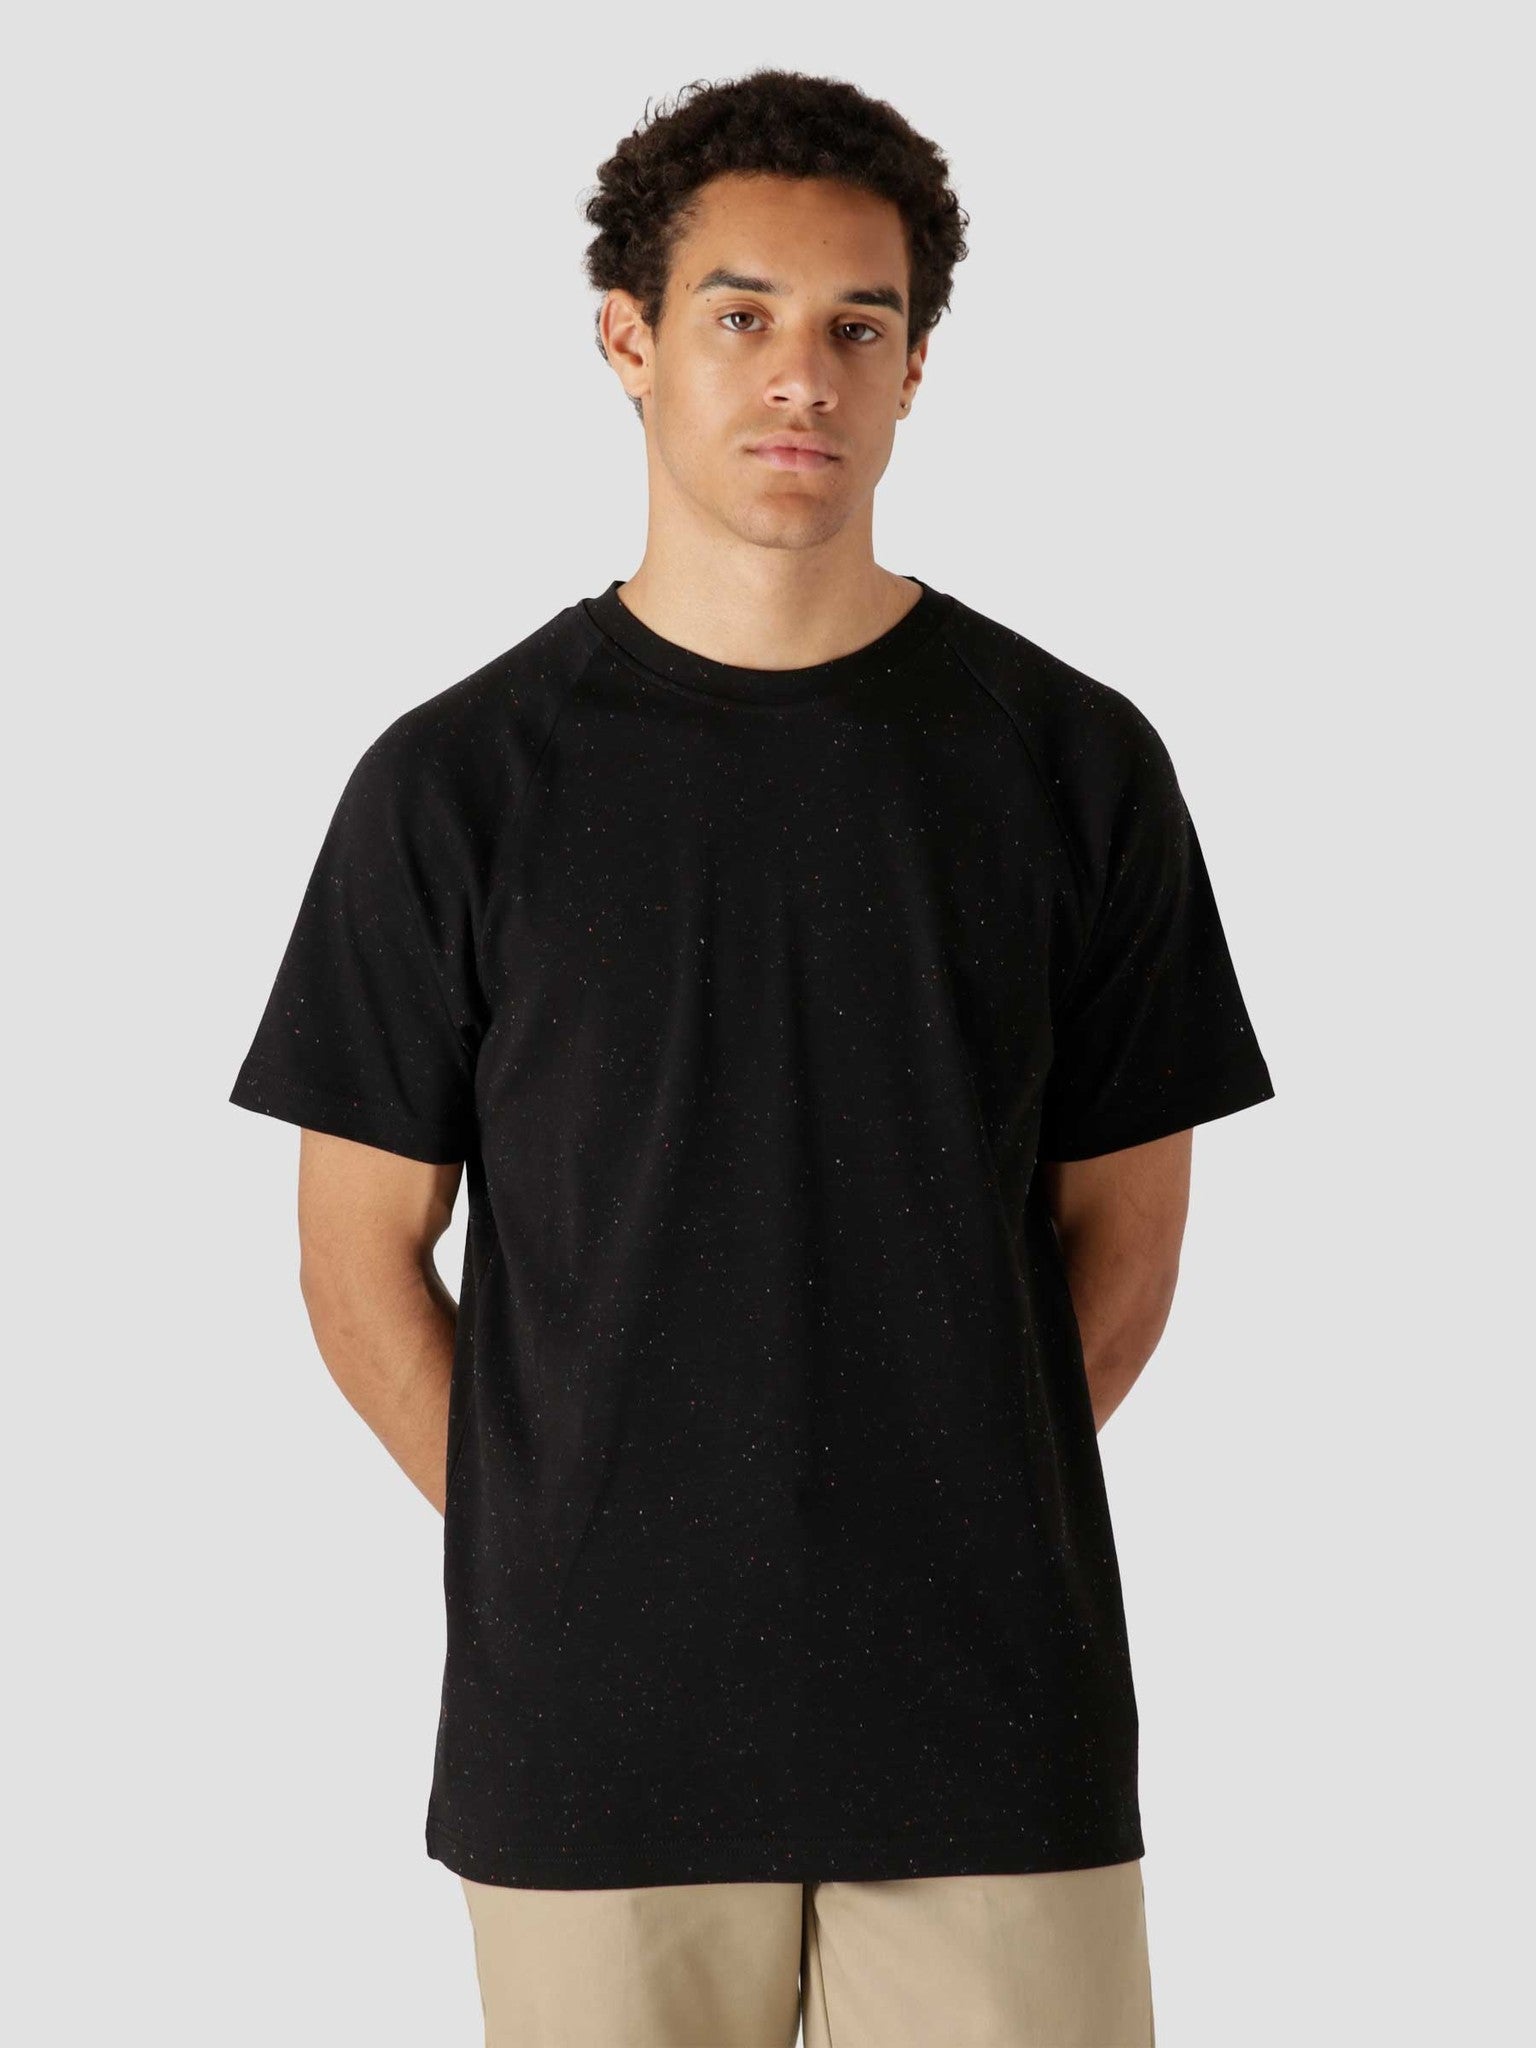 QB301 Speckle T-shirt Black